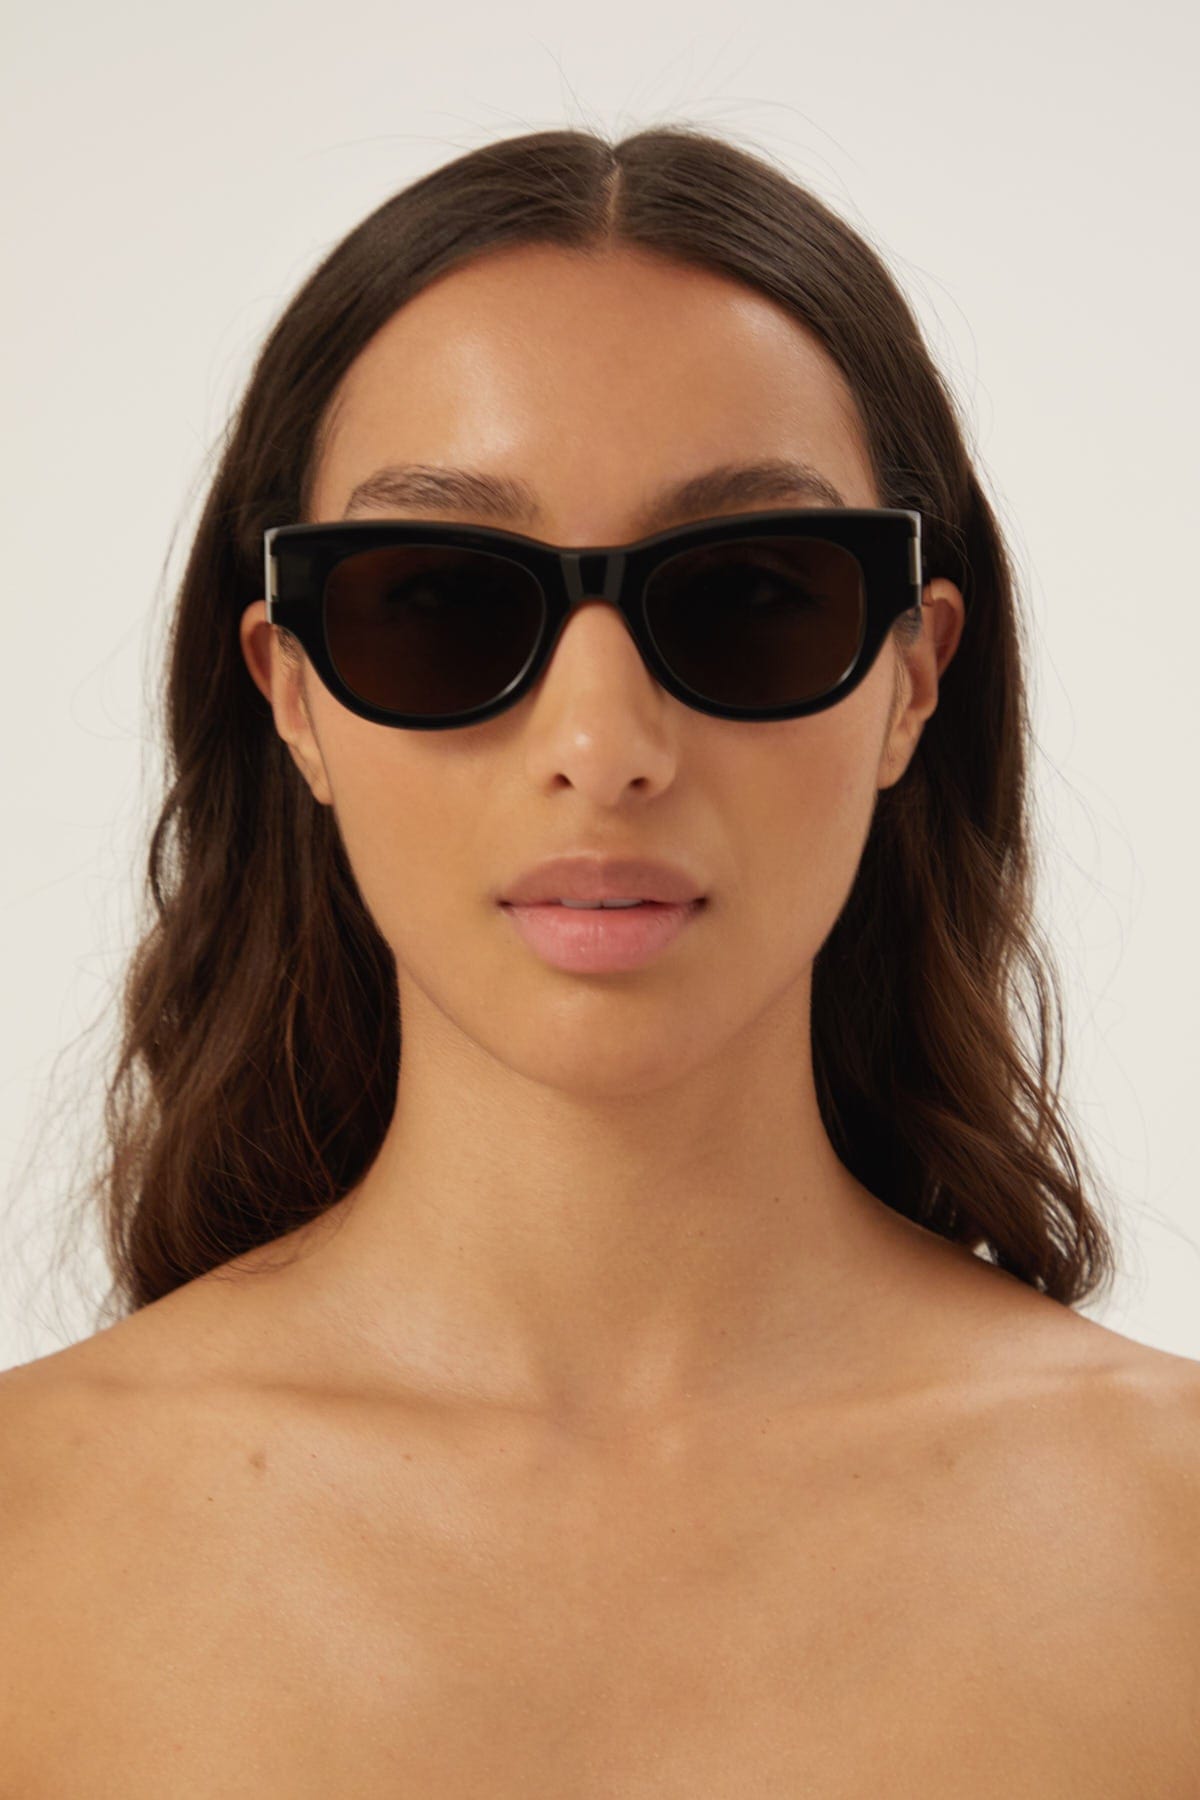 Saint Laurent bold oval black sunglasses - Eyewear Club